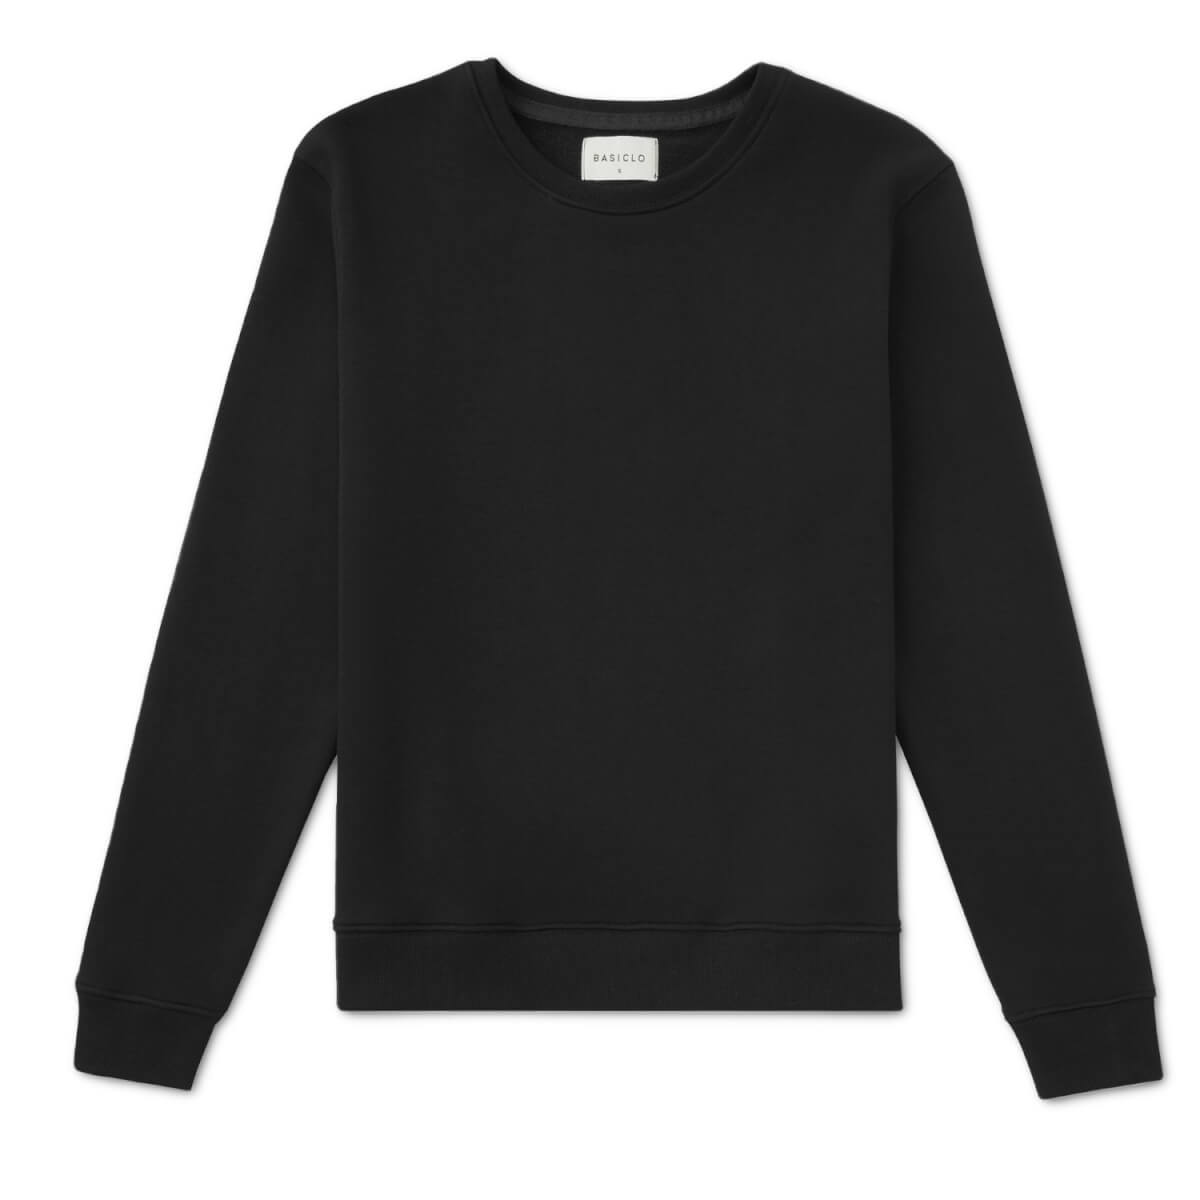 Men's Essential Sweatshirt Black Small Basiclo